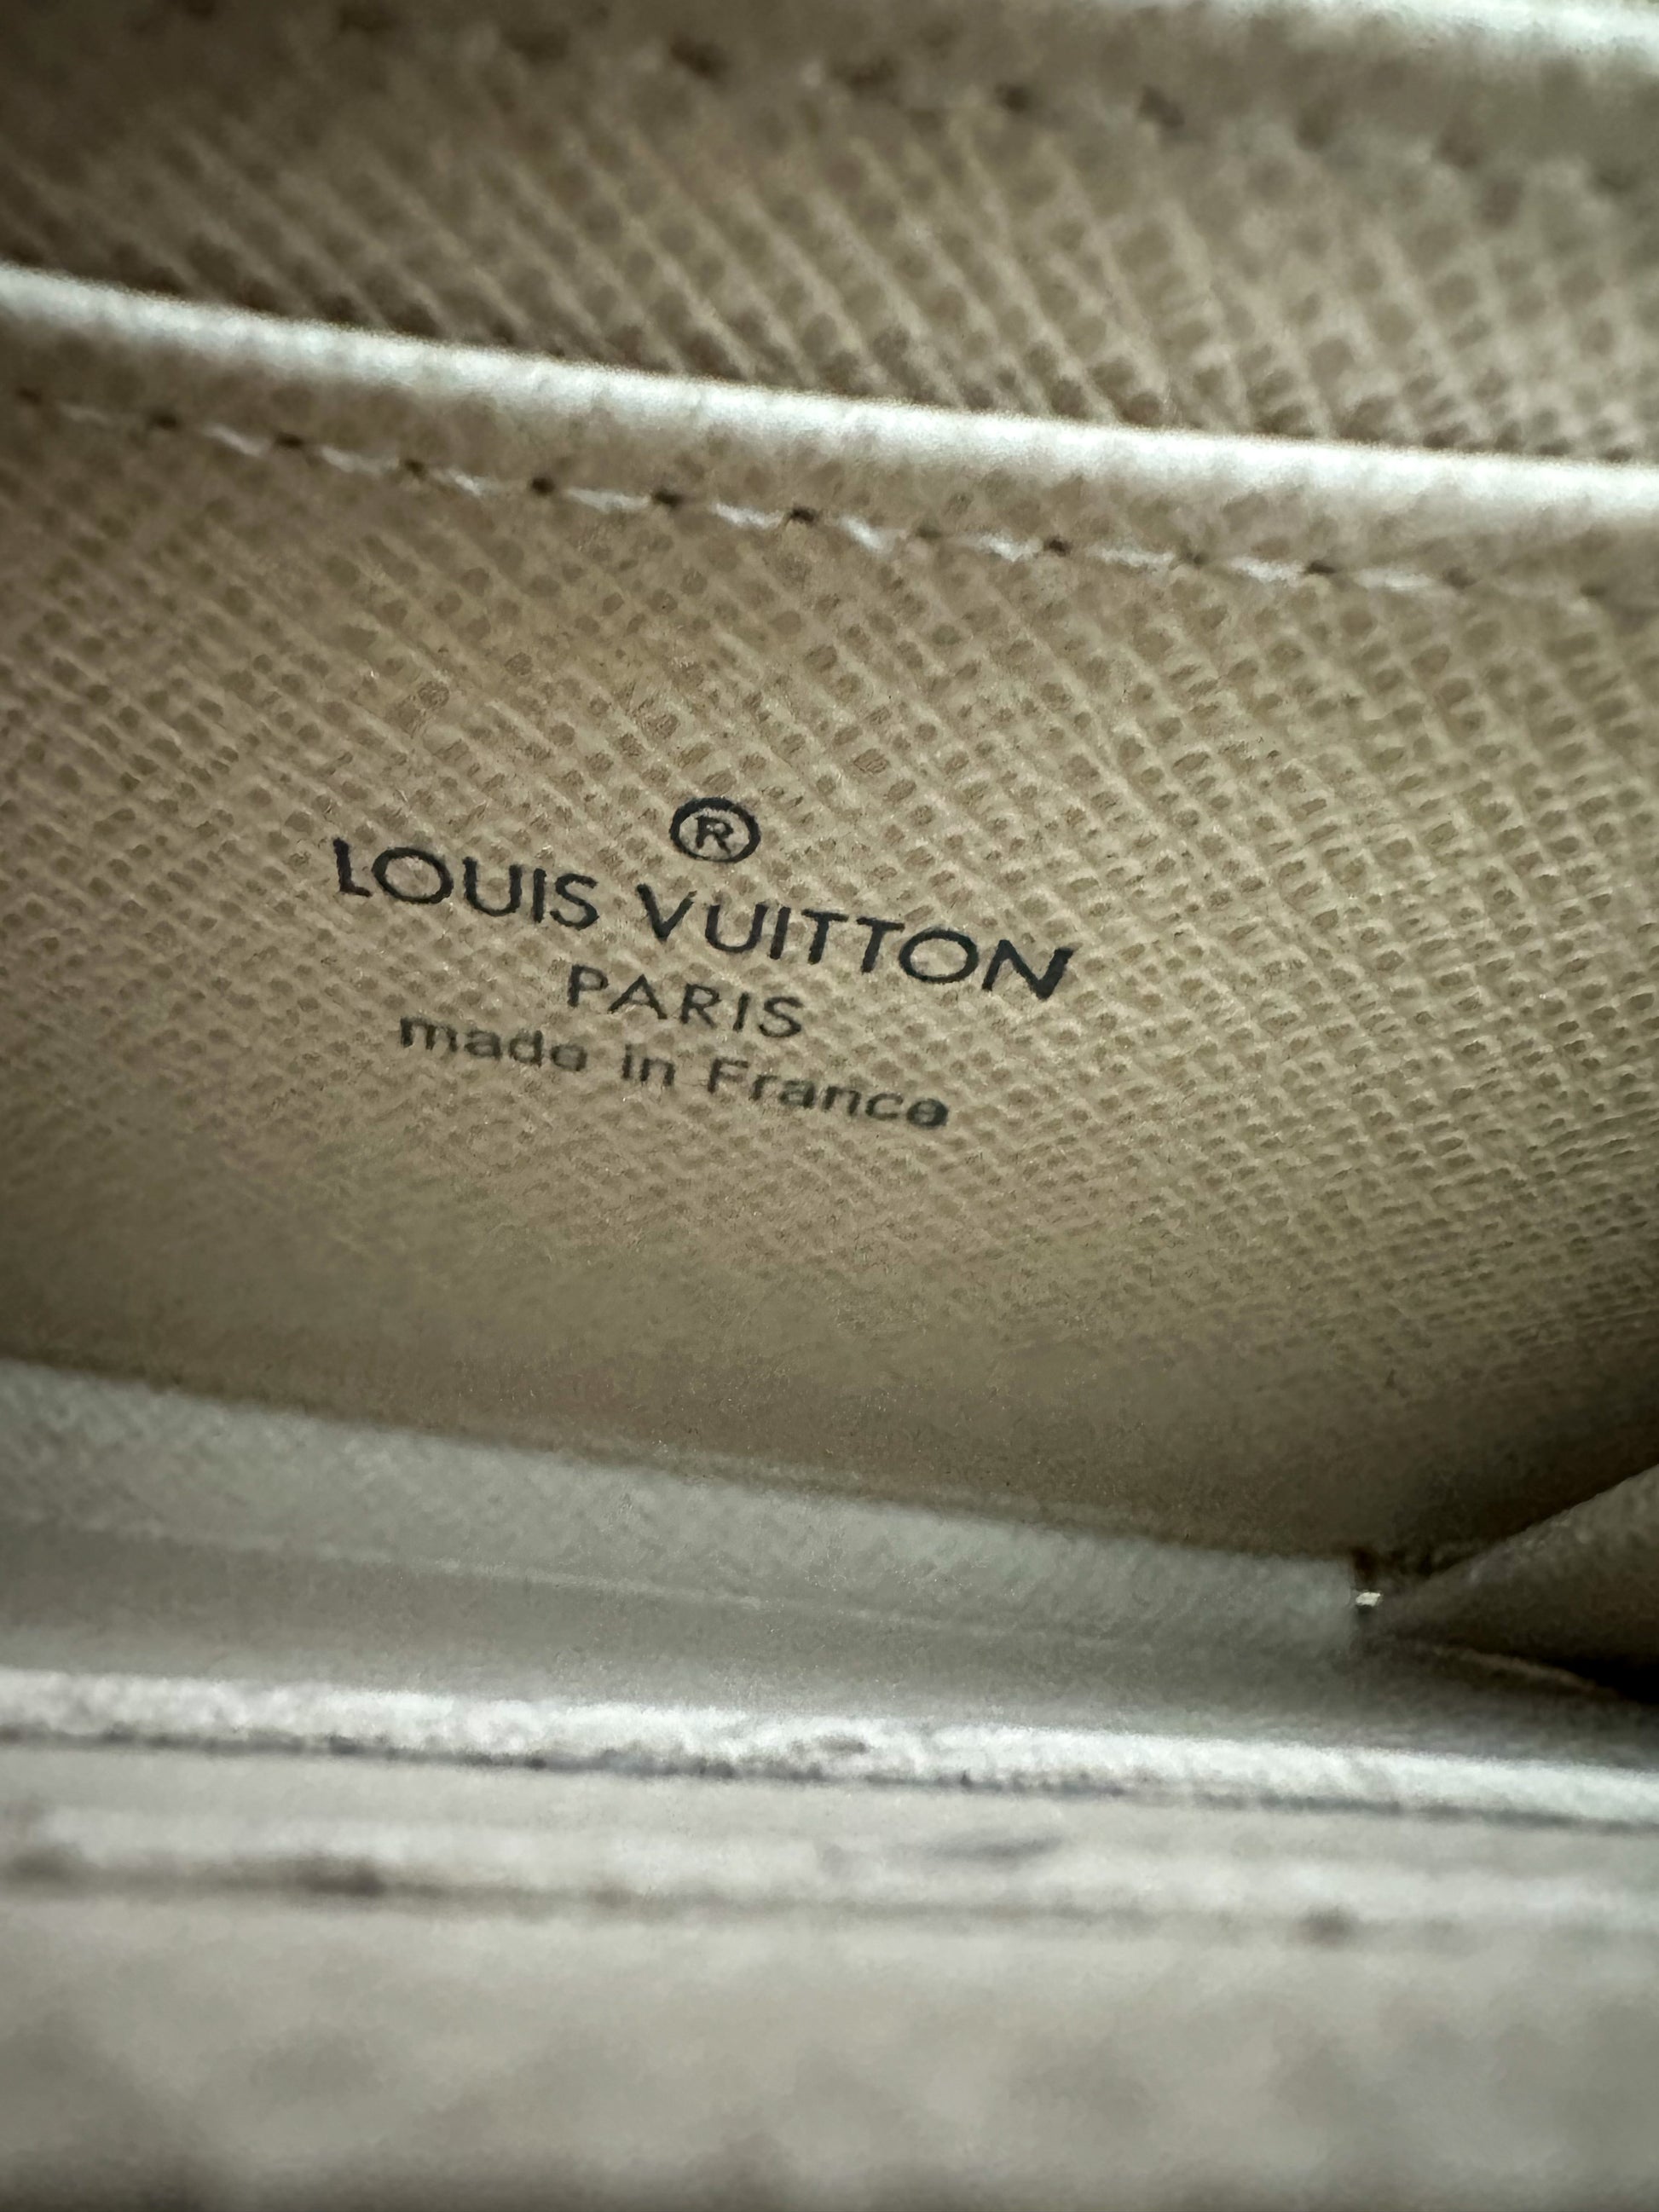 Louis Vuitton Birds Zippy Damier Azur Coin Purse White